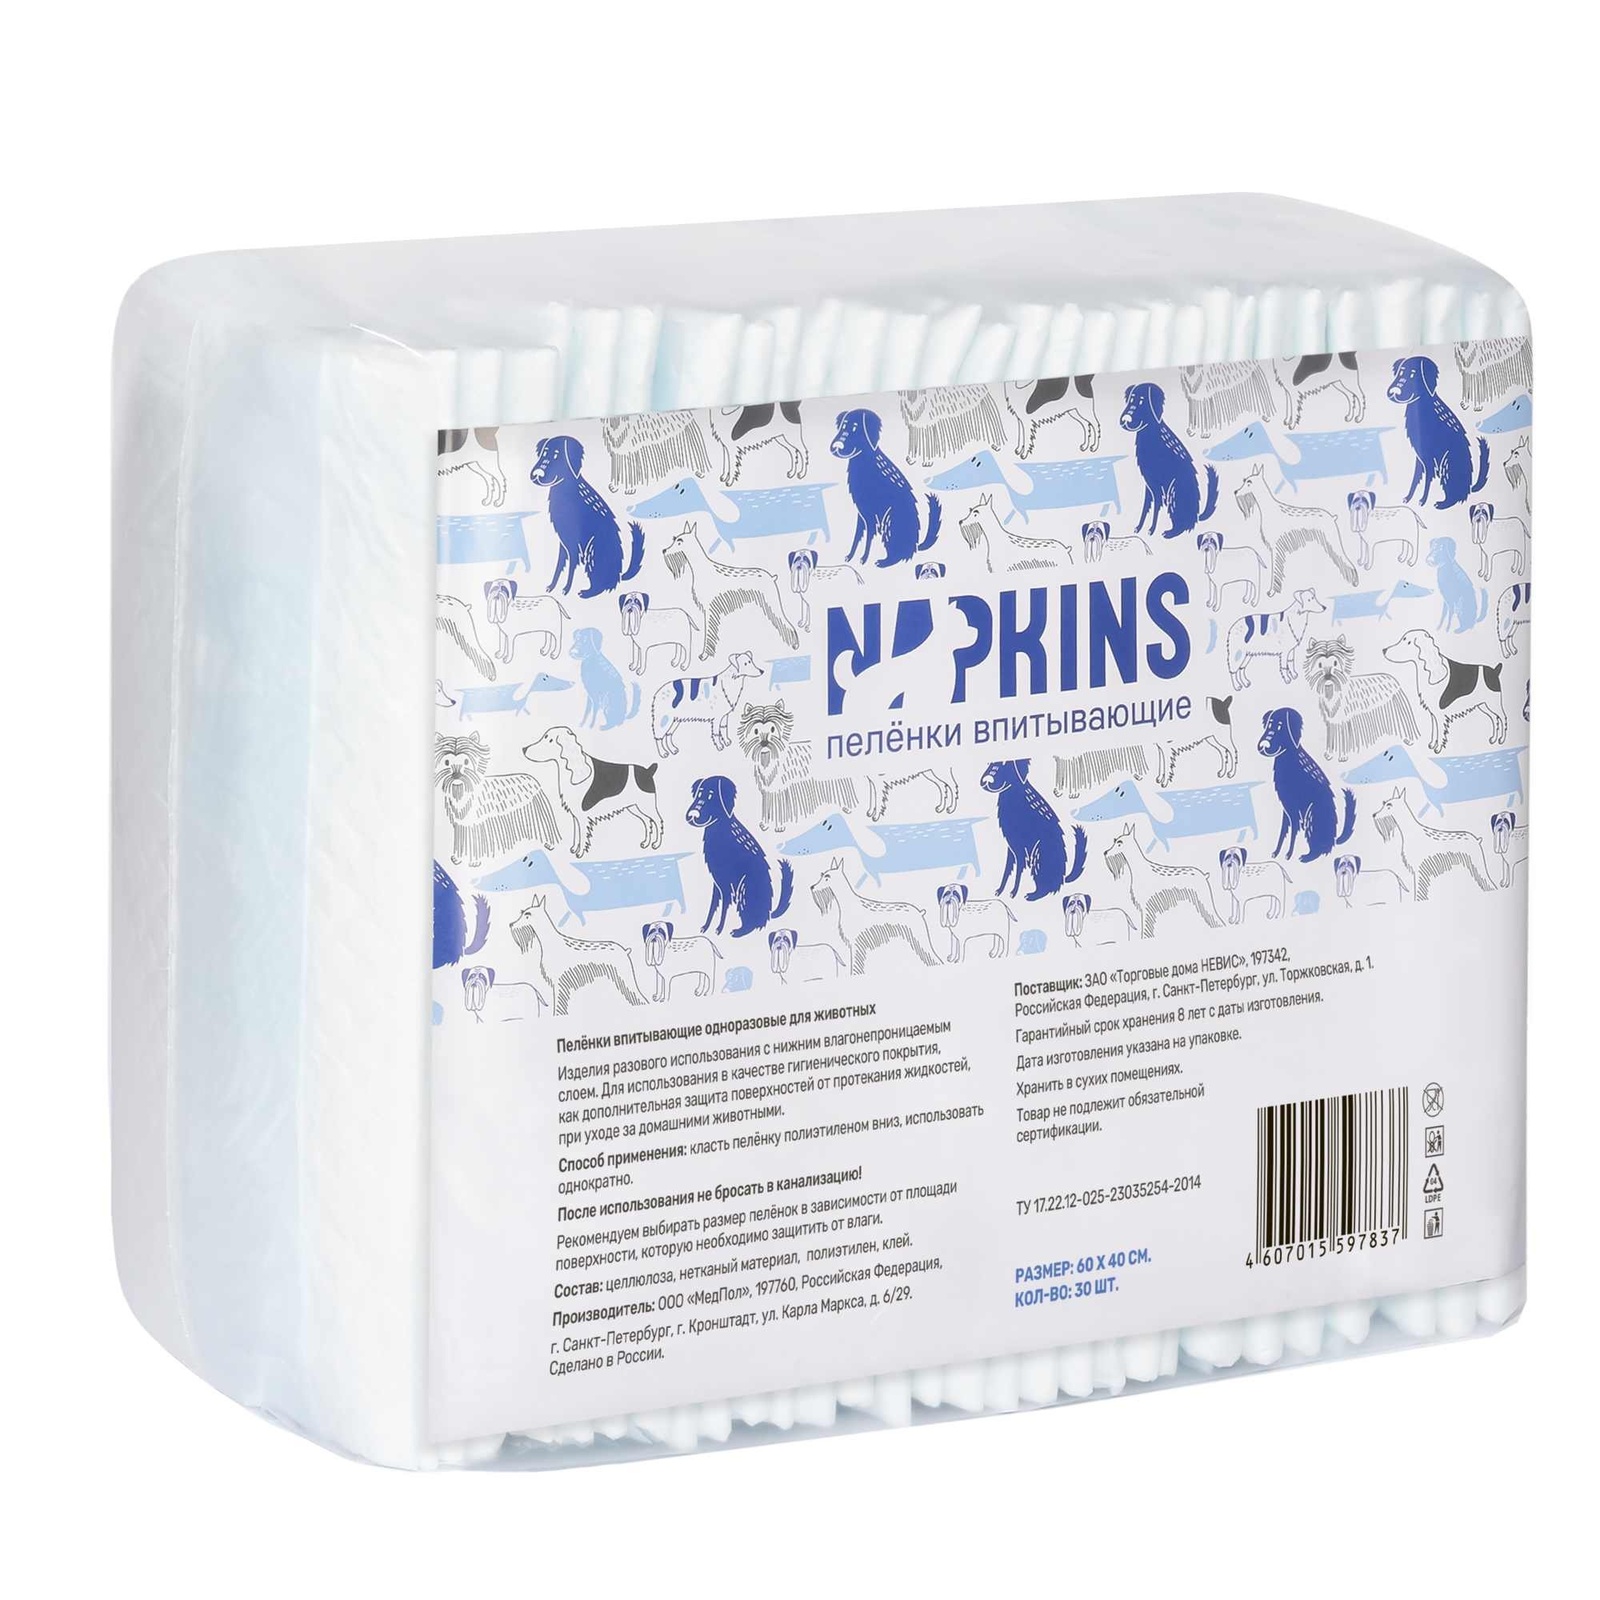 NAPKINS NAPKINS впитывающие пелёнки с целлюлозой для собак 60х40 (300 г) napkins napkins гелевые пелёнки для собак 60х40 300 г